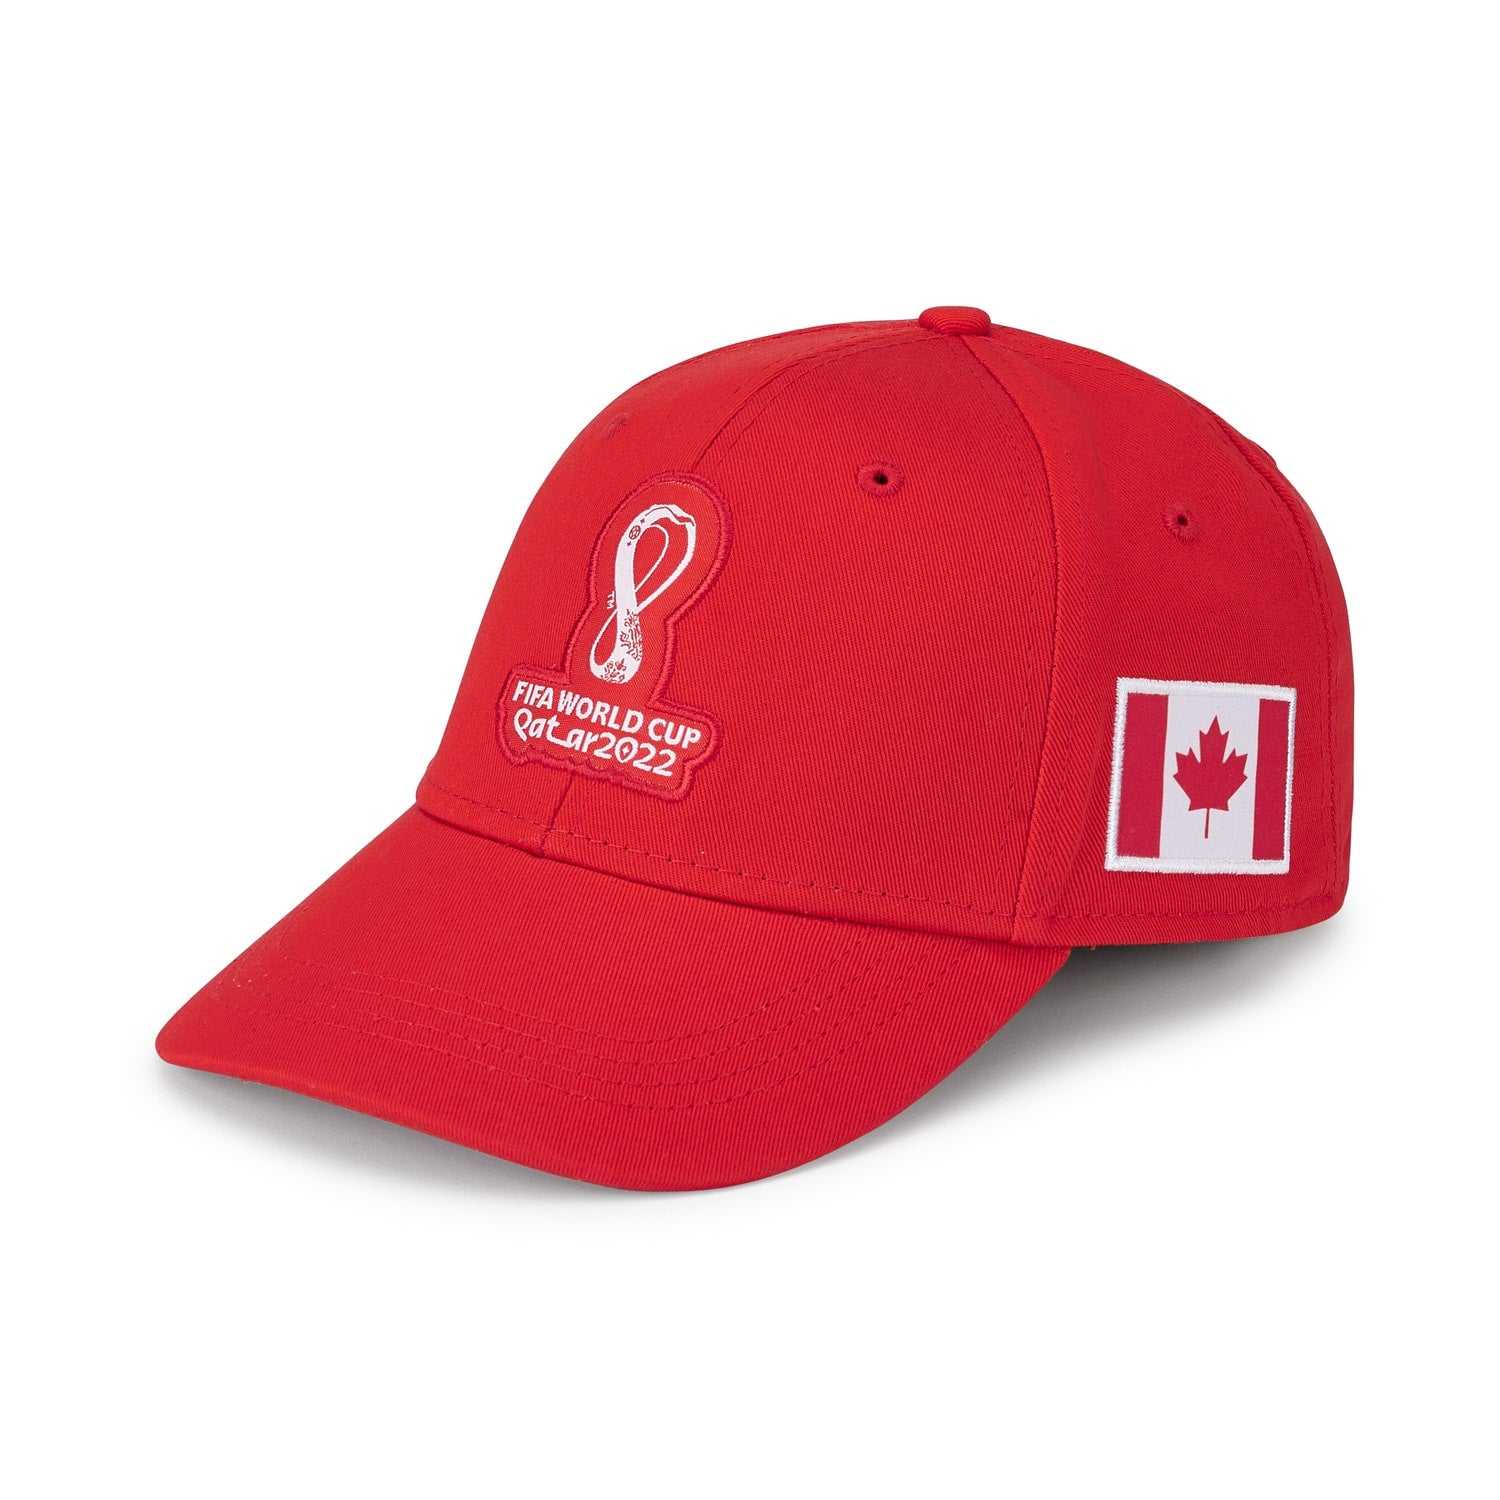 2022 World Cup Canada Red Cap - Men's